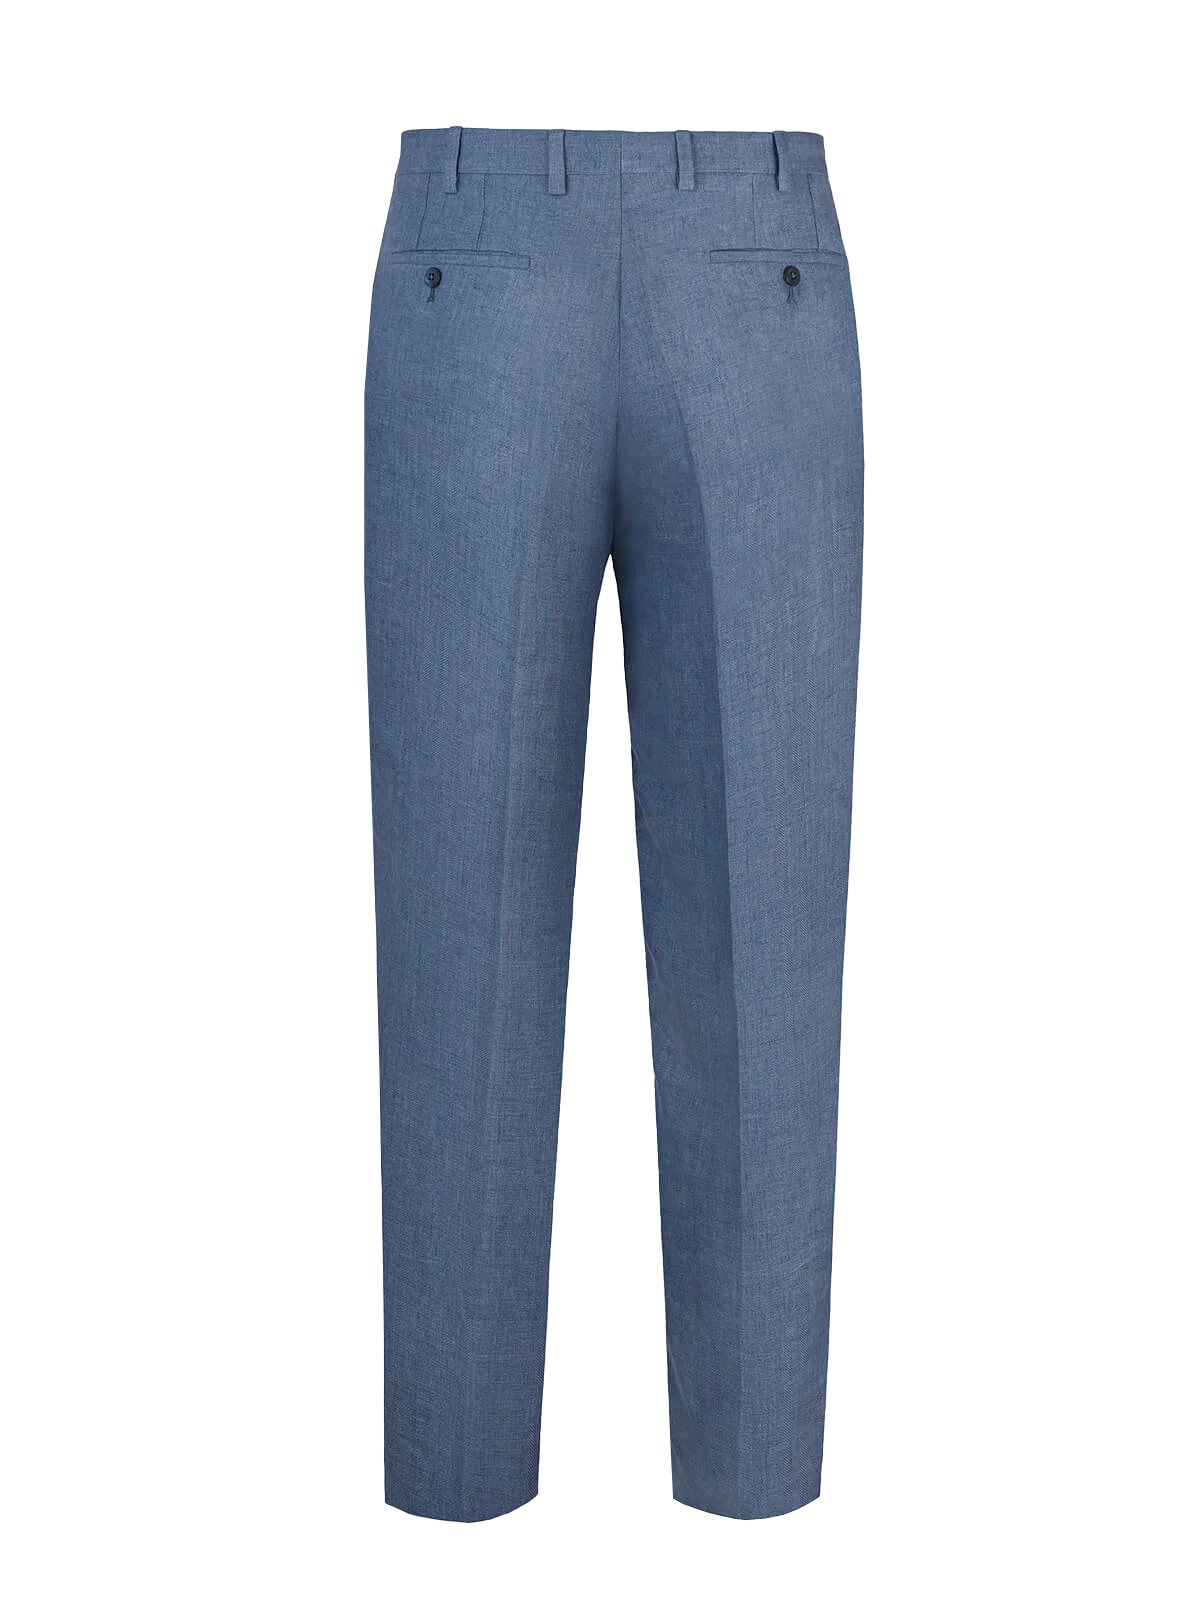 Pantalone Brezza 100% capri for man linen jeans trouser back